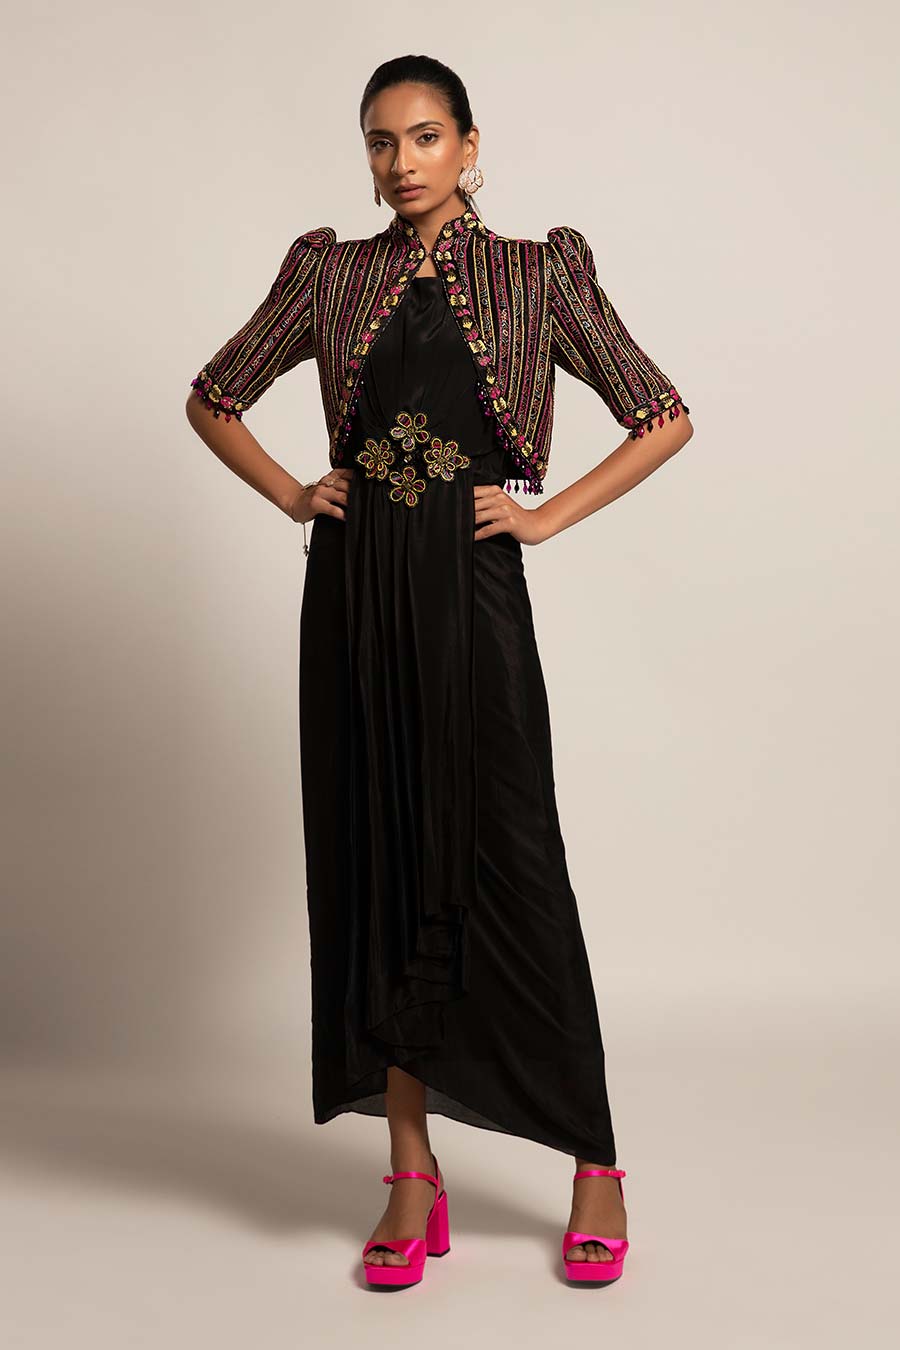 Black Beauteous Embroidered Dress & Short Jacket Set